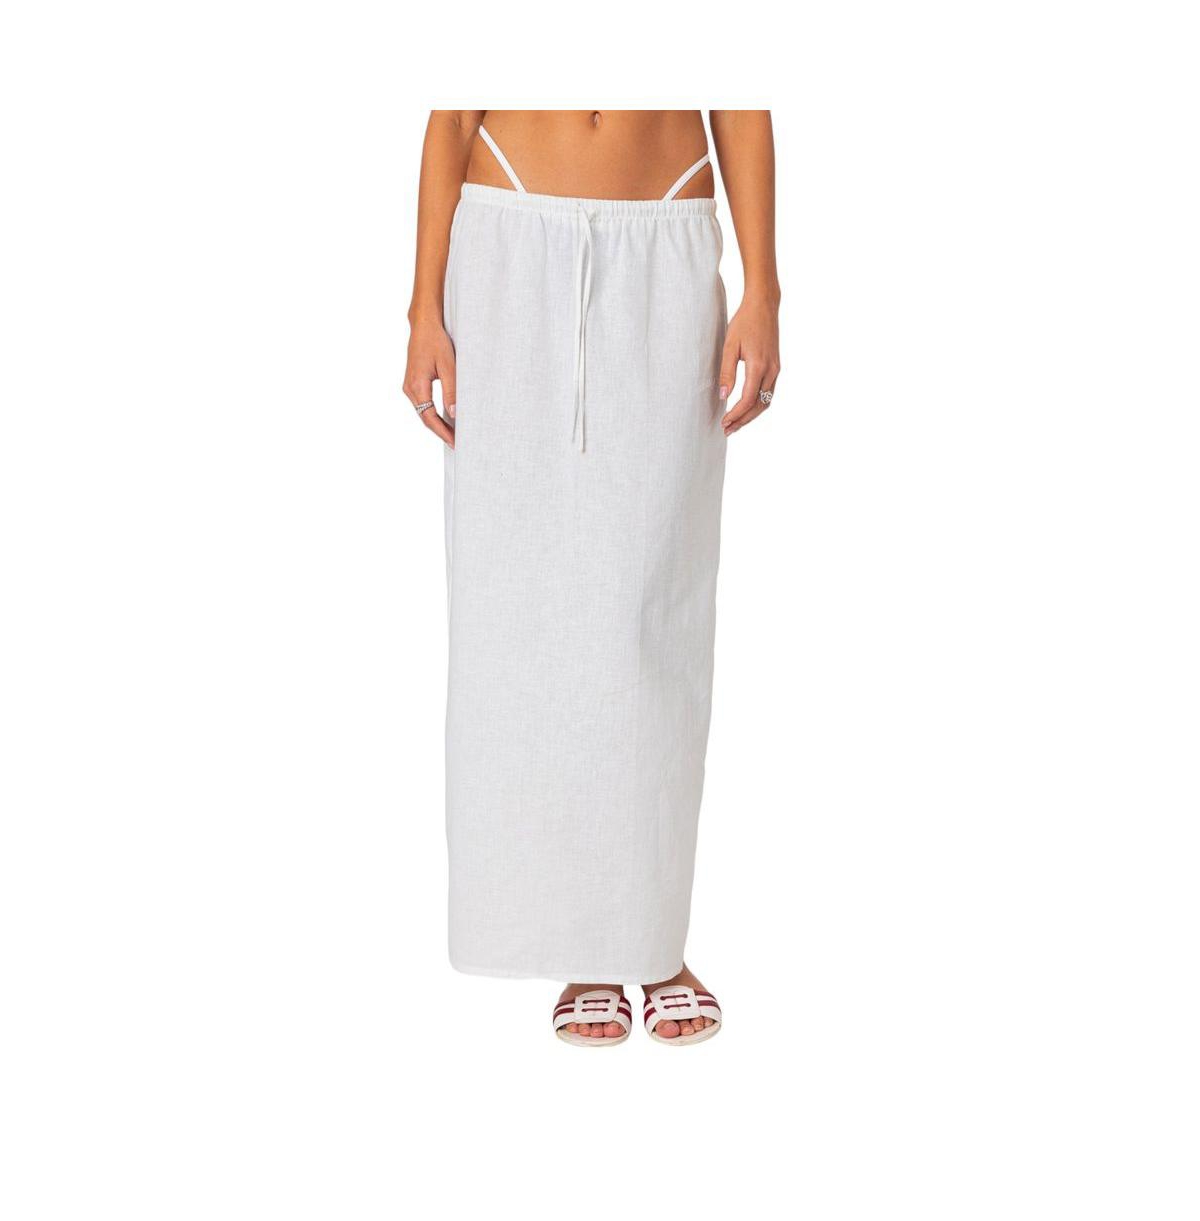 Women's Rayla Linen Look Maxi Skirt - White